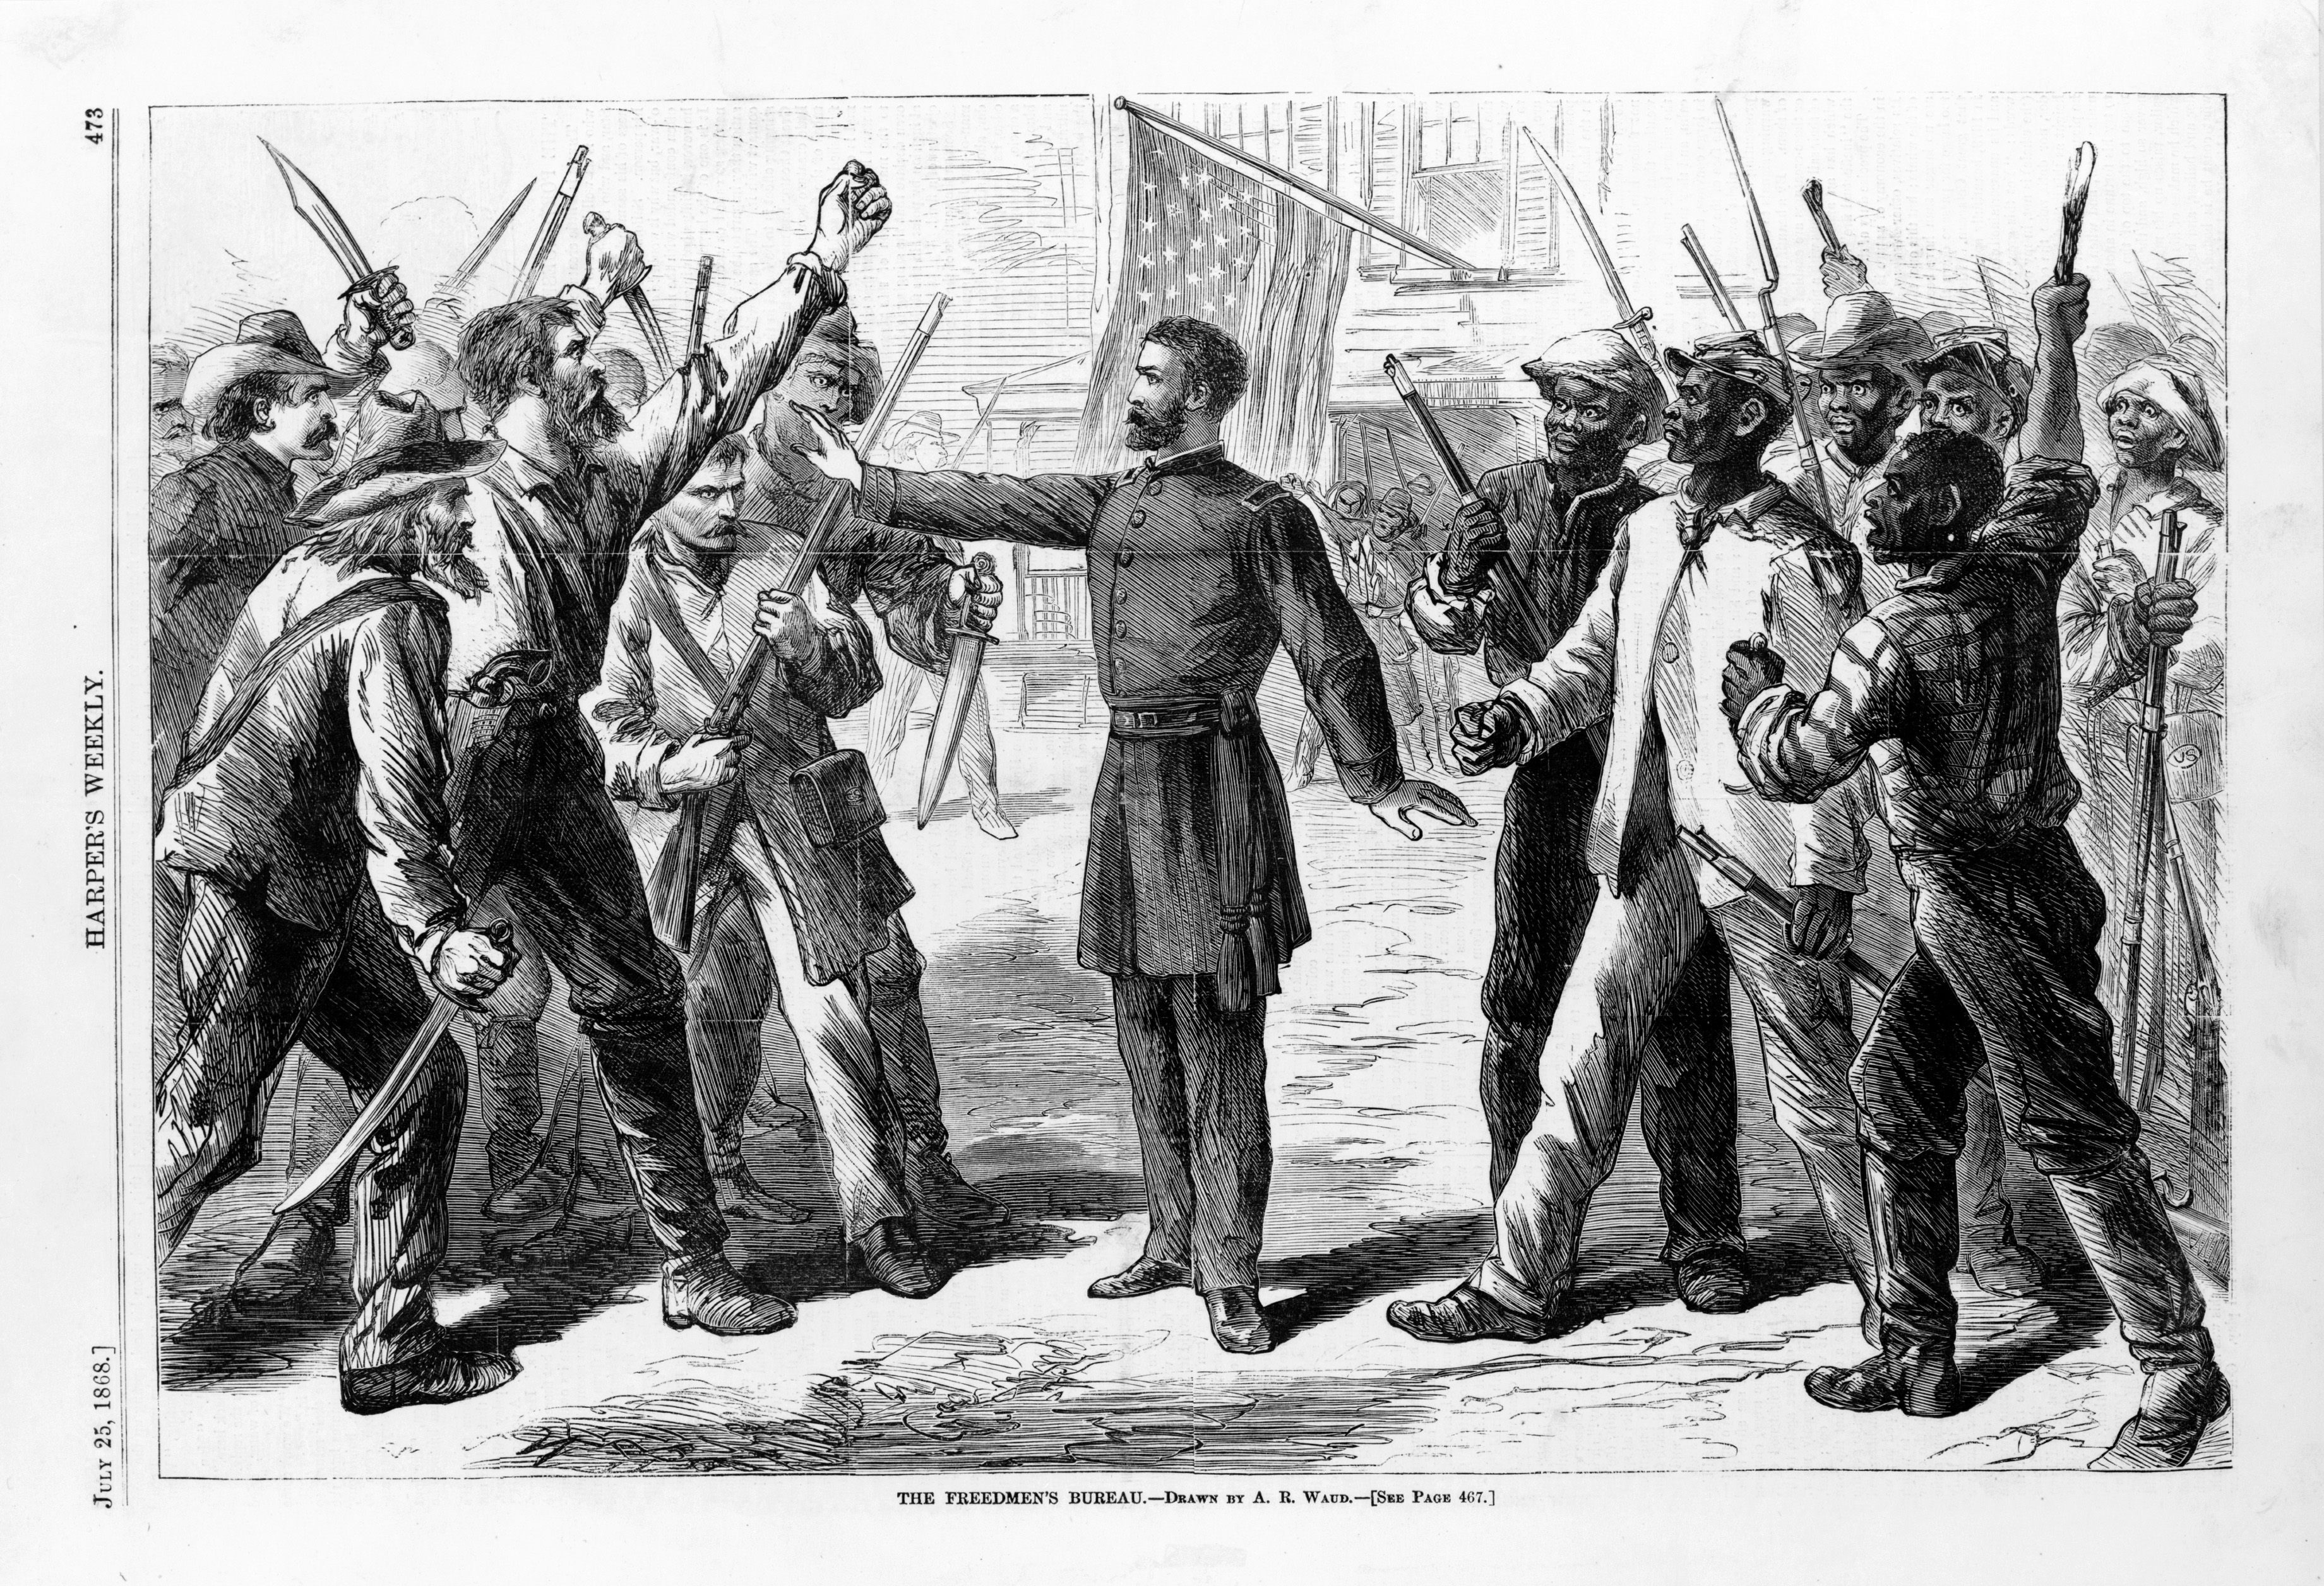 former slaves granted citizenship